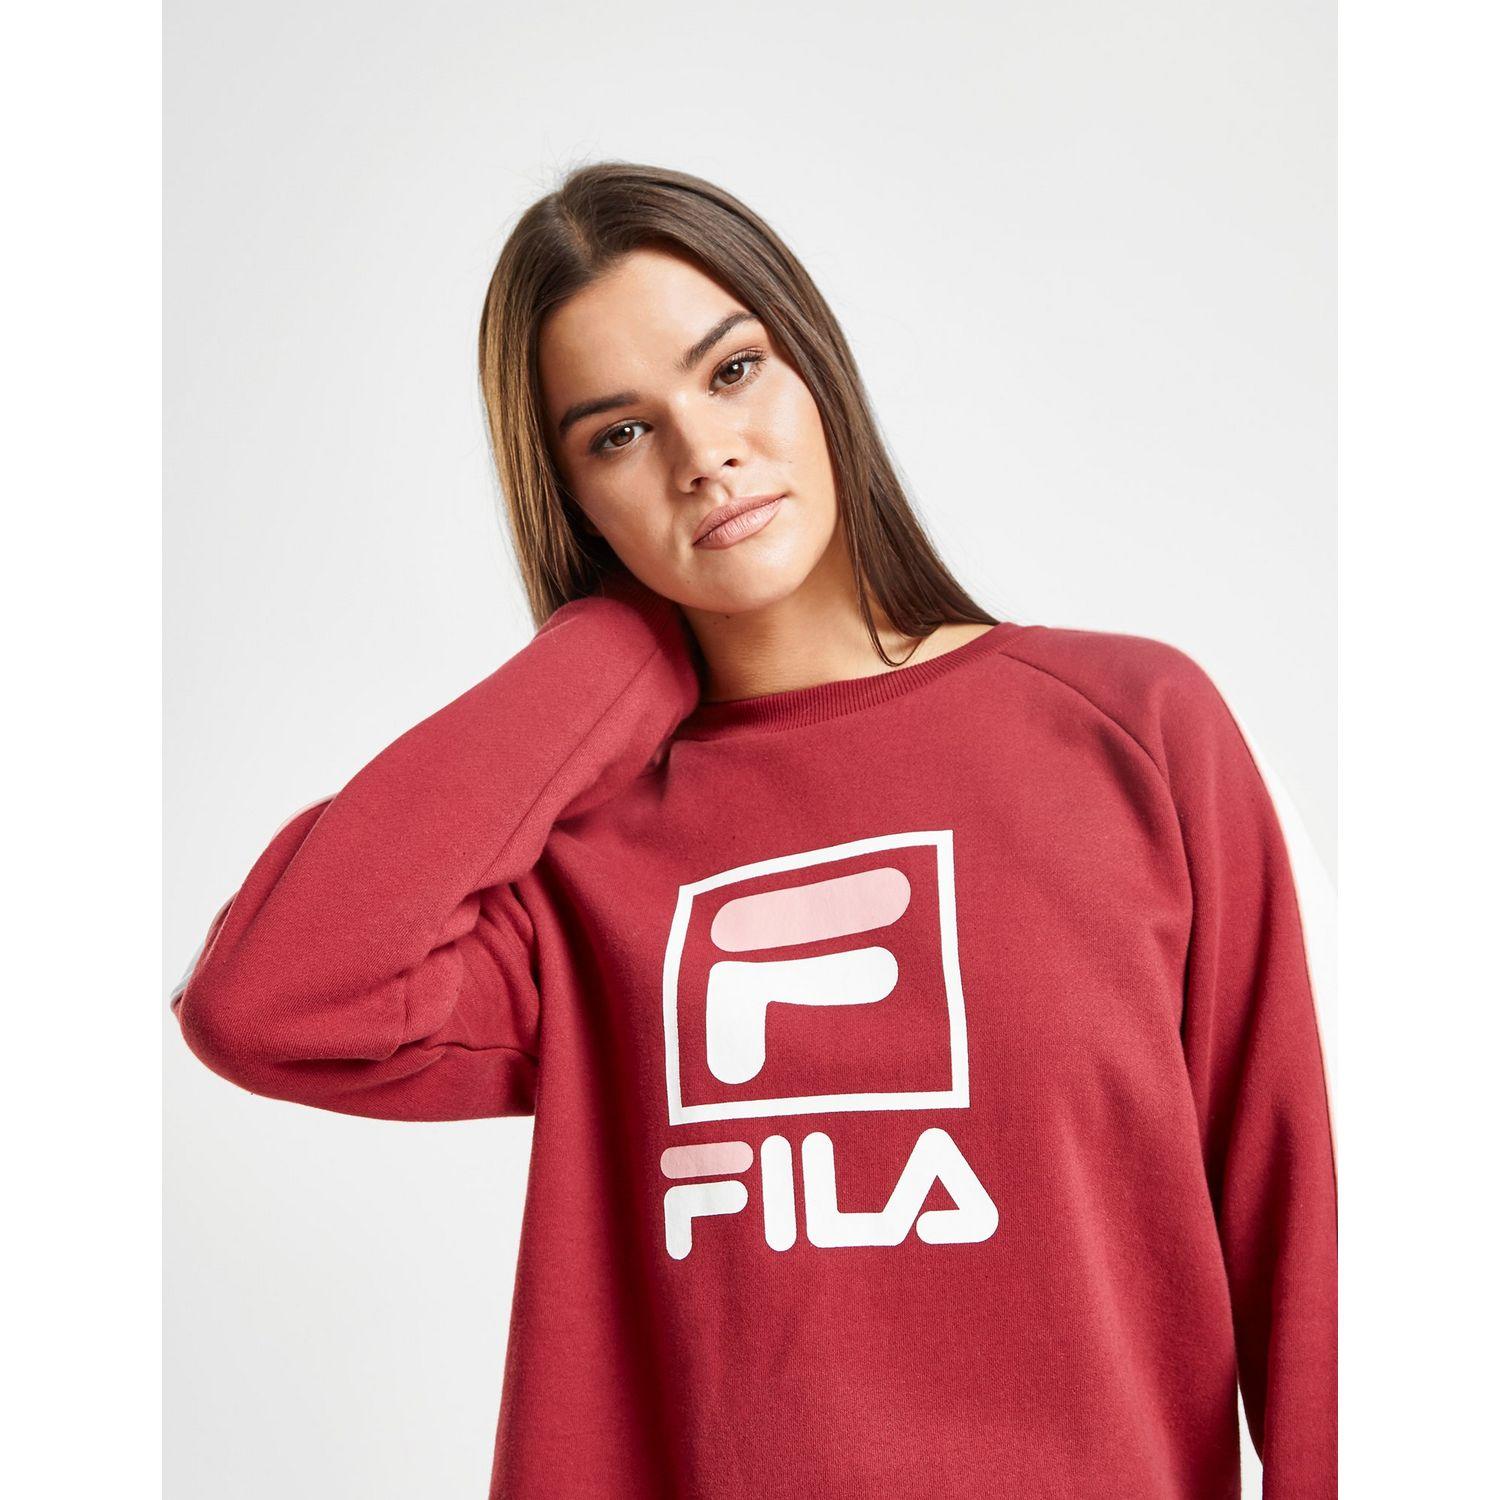 Fila Box Logo Crew Sweatshirt Top Sellers, 50% OFF | www.ingeniovirtual.com